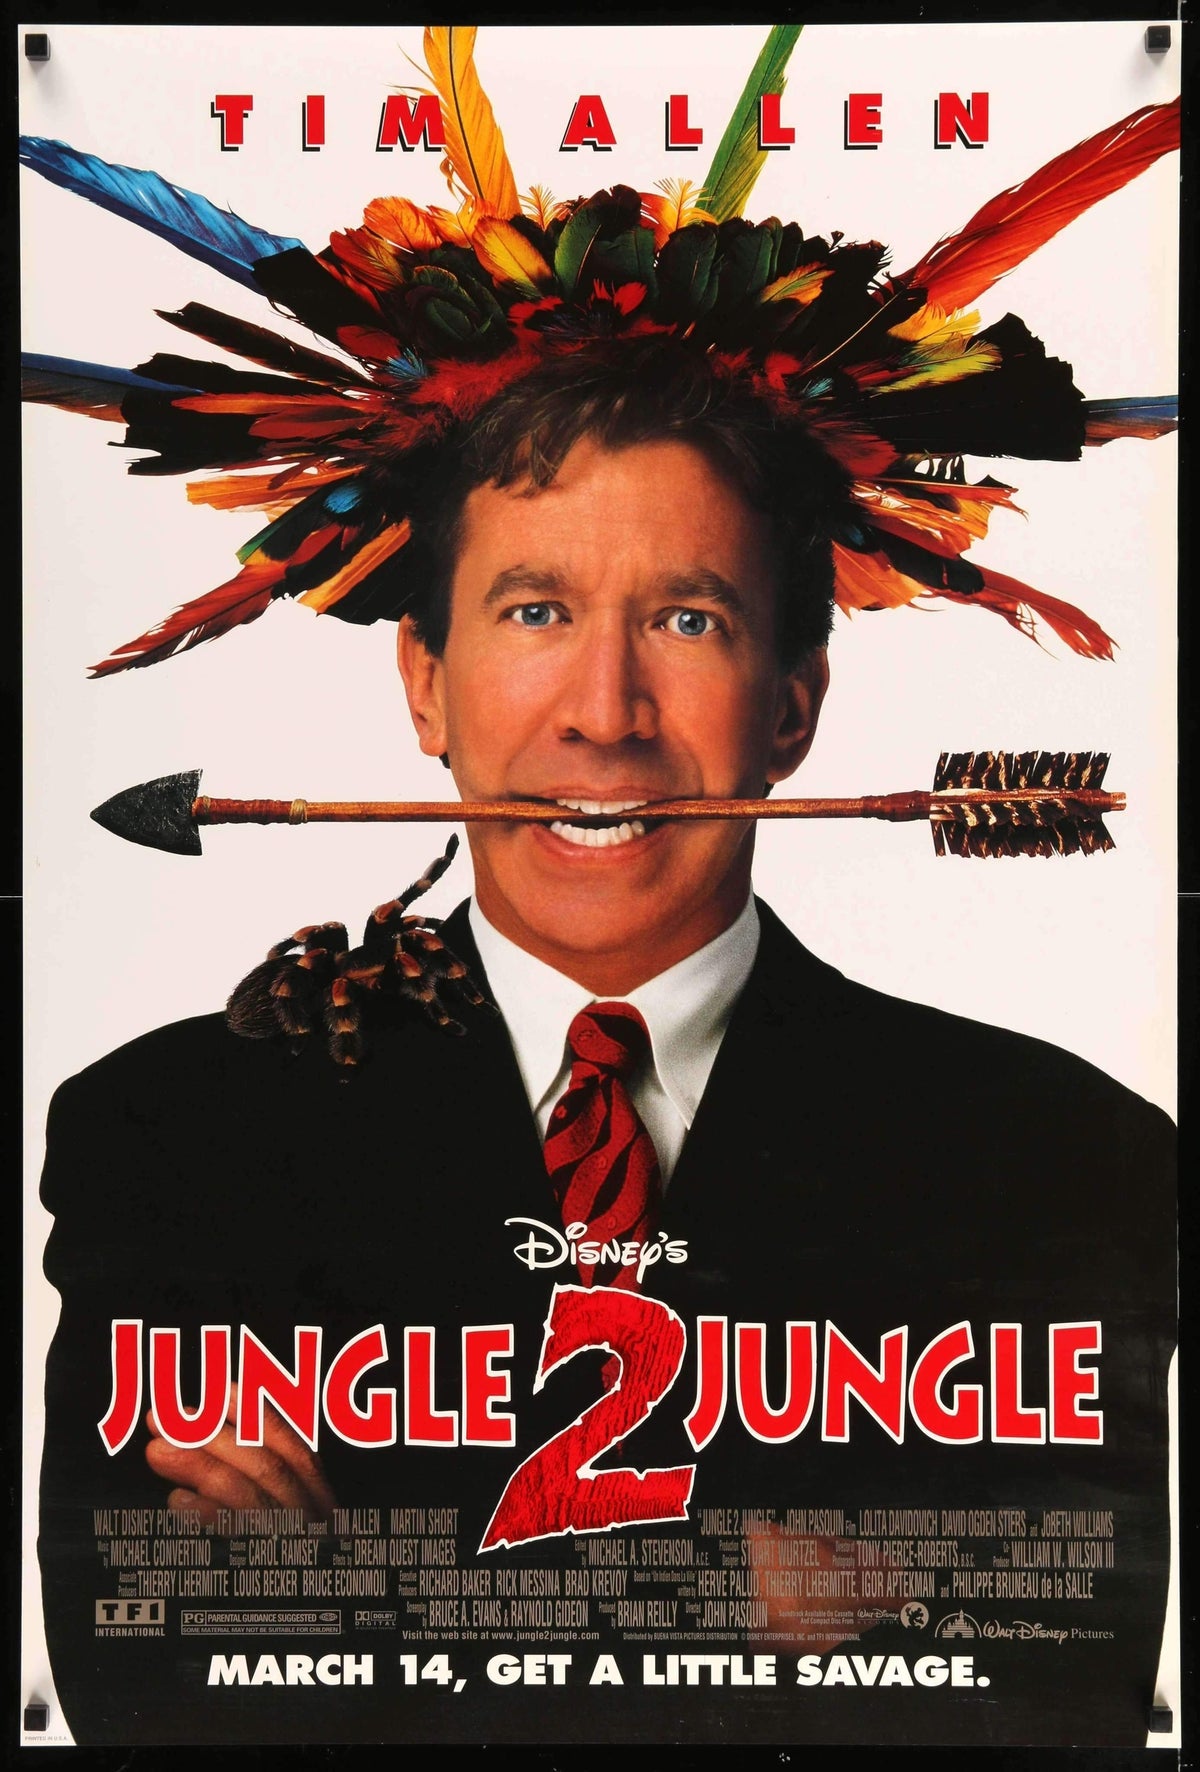 Jungle 2 Jungle (1997) original movie poster for sale at Original Film Art